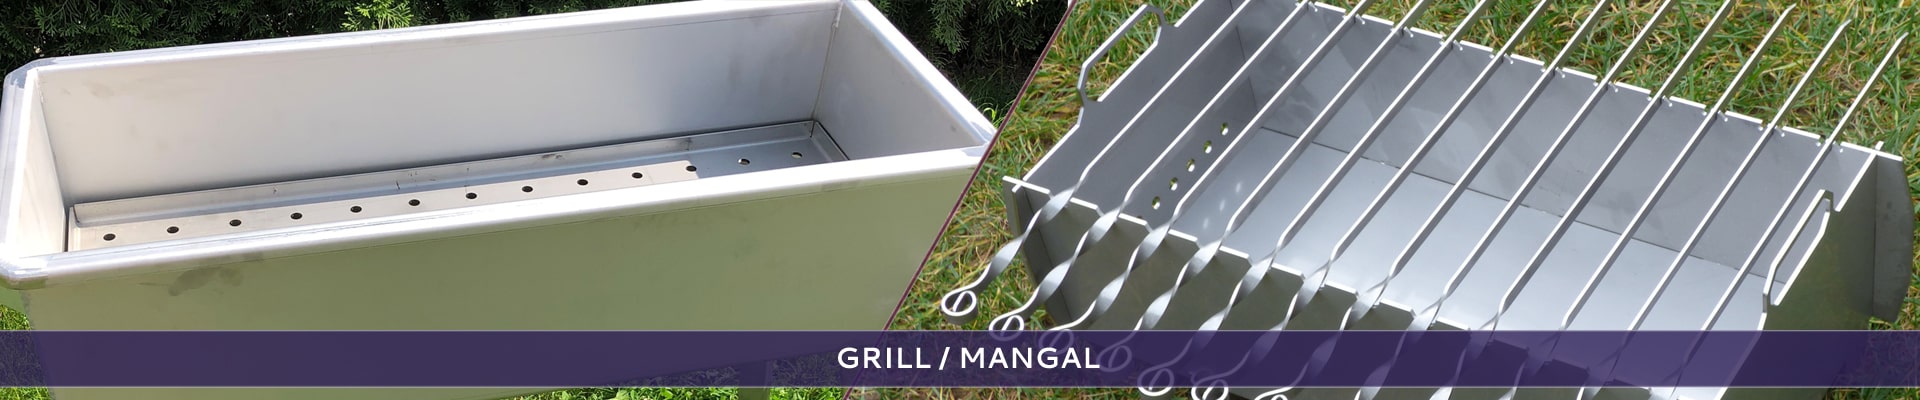 ᐅ TF Metalldesign Shop ᐅ Schutzhülle / Abdeckung aus PVC für Mangal Grill